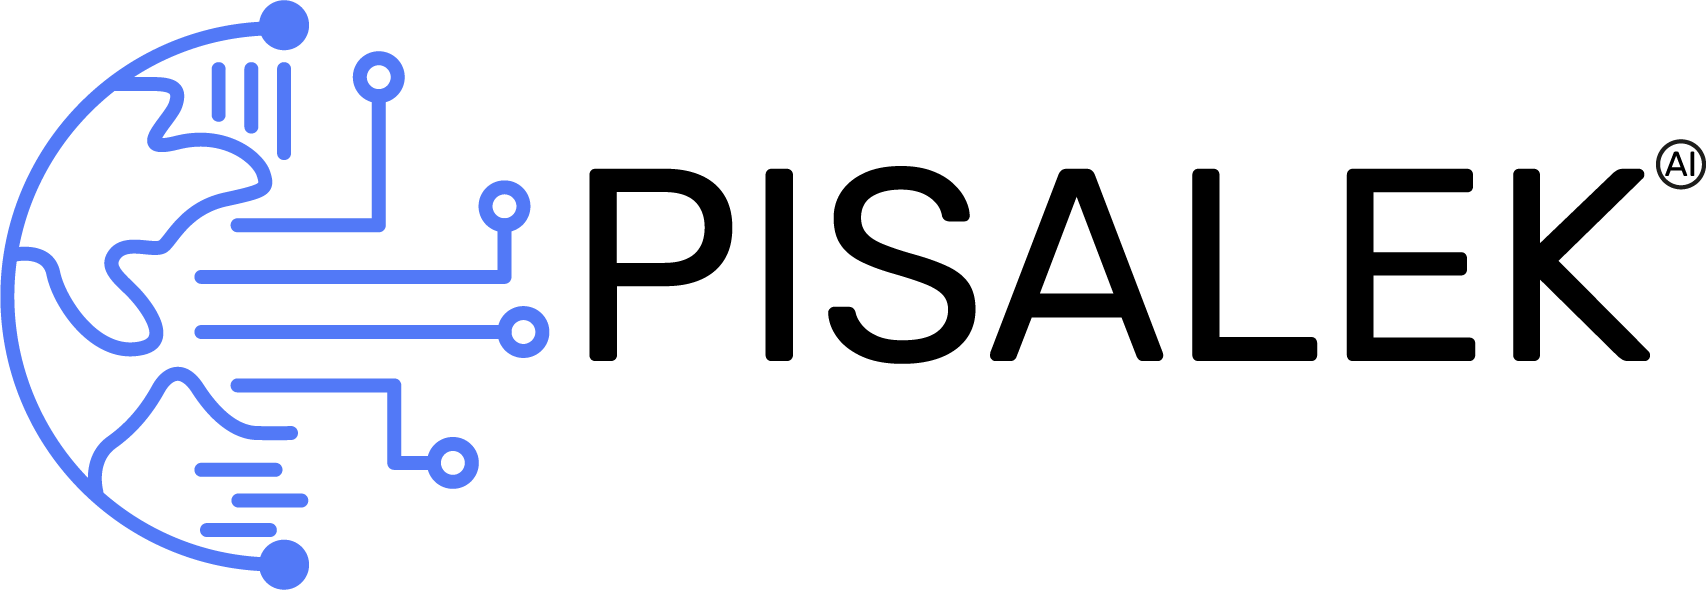 ximnasio-footer-logo